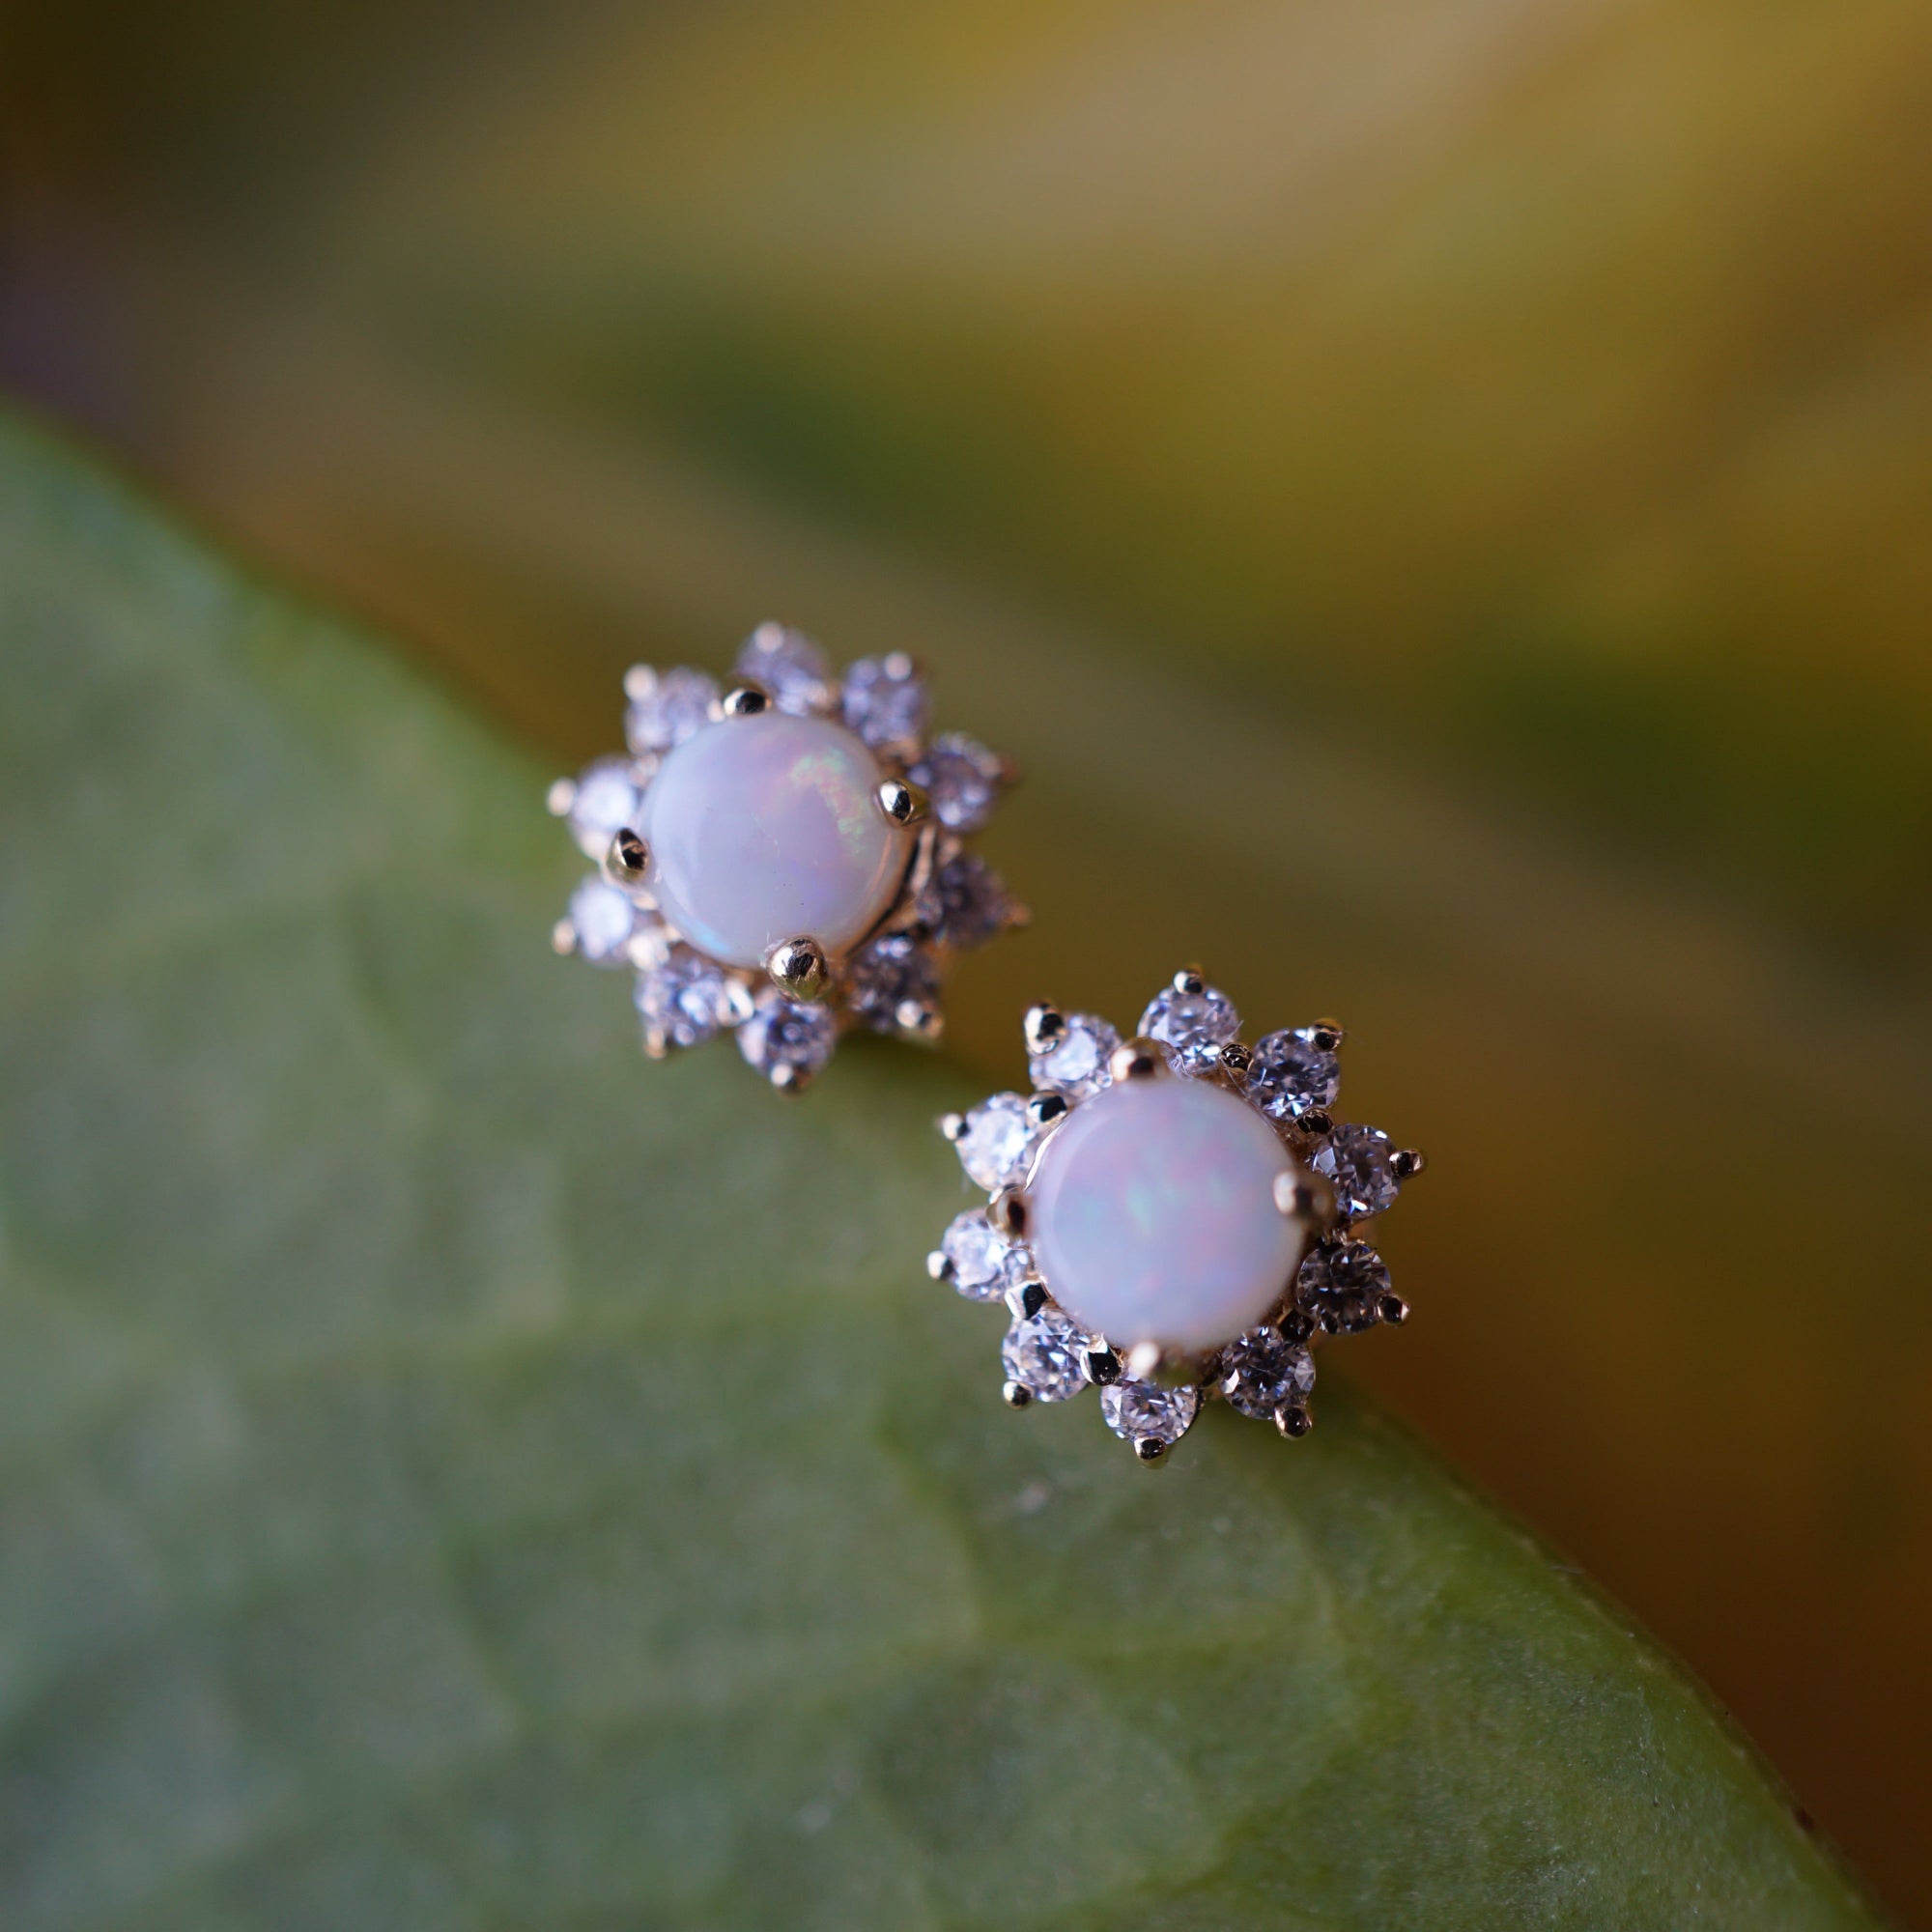 18k solid gold flower 4mm round genuine crystal opal earring studs-Vsabel Jewellery